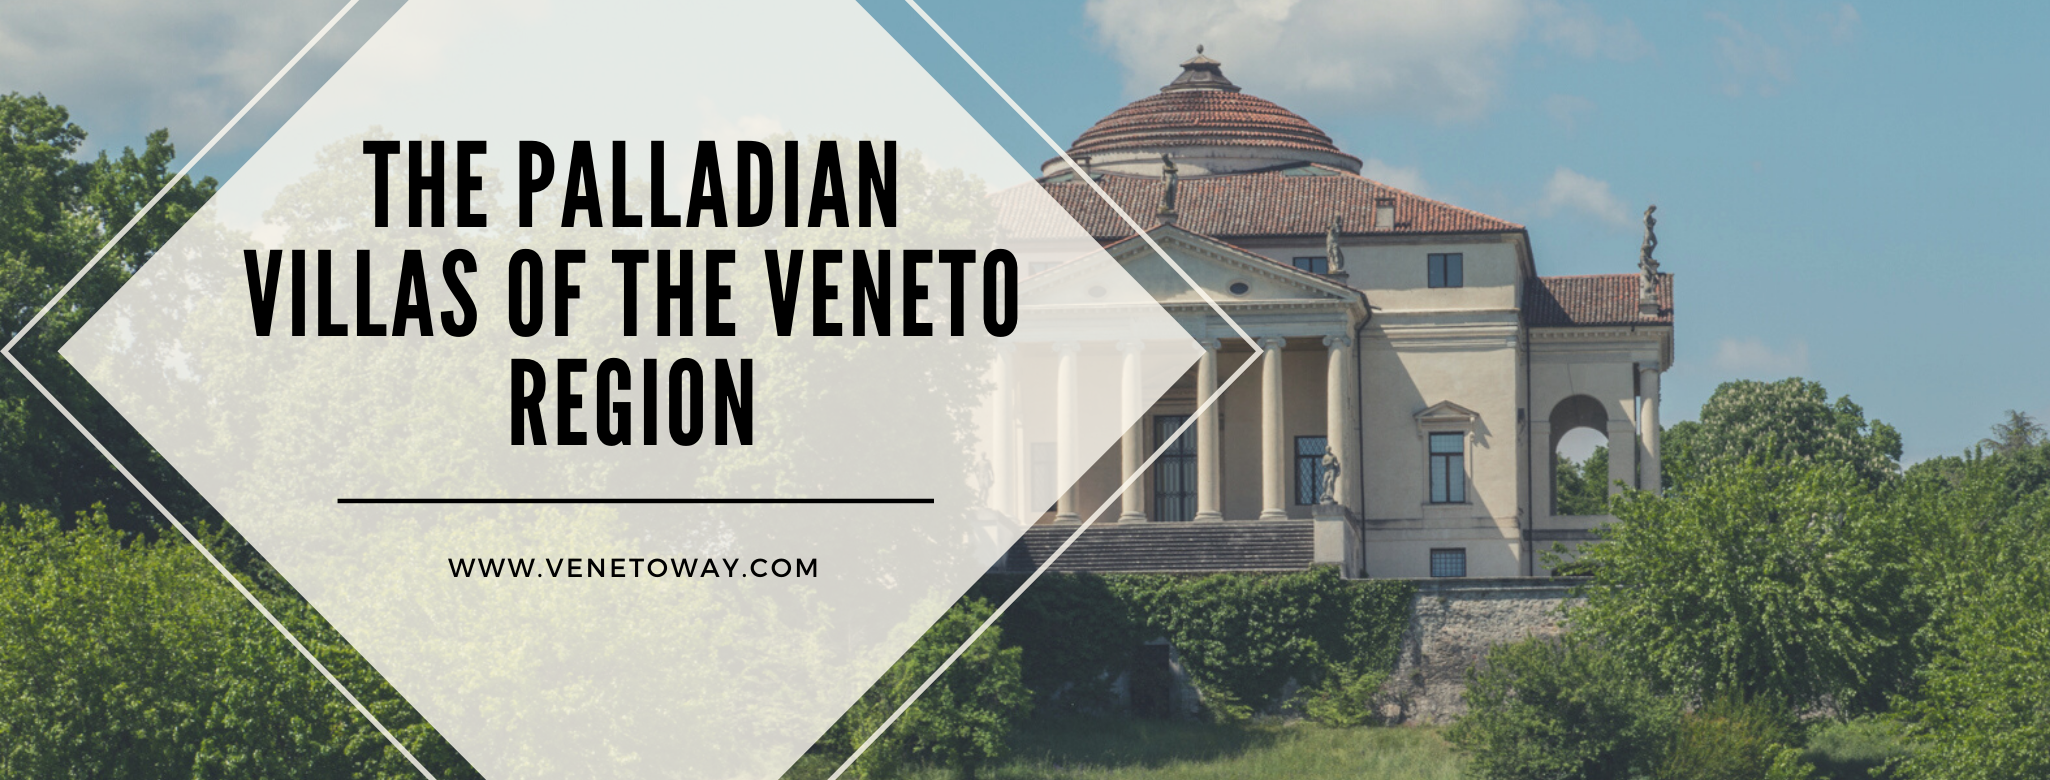 The Palladian Villas of the Veneto Region